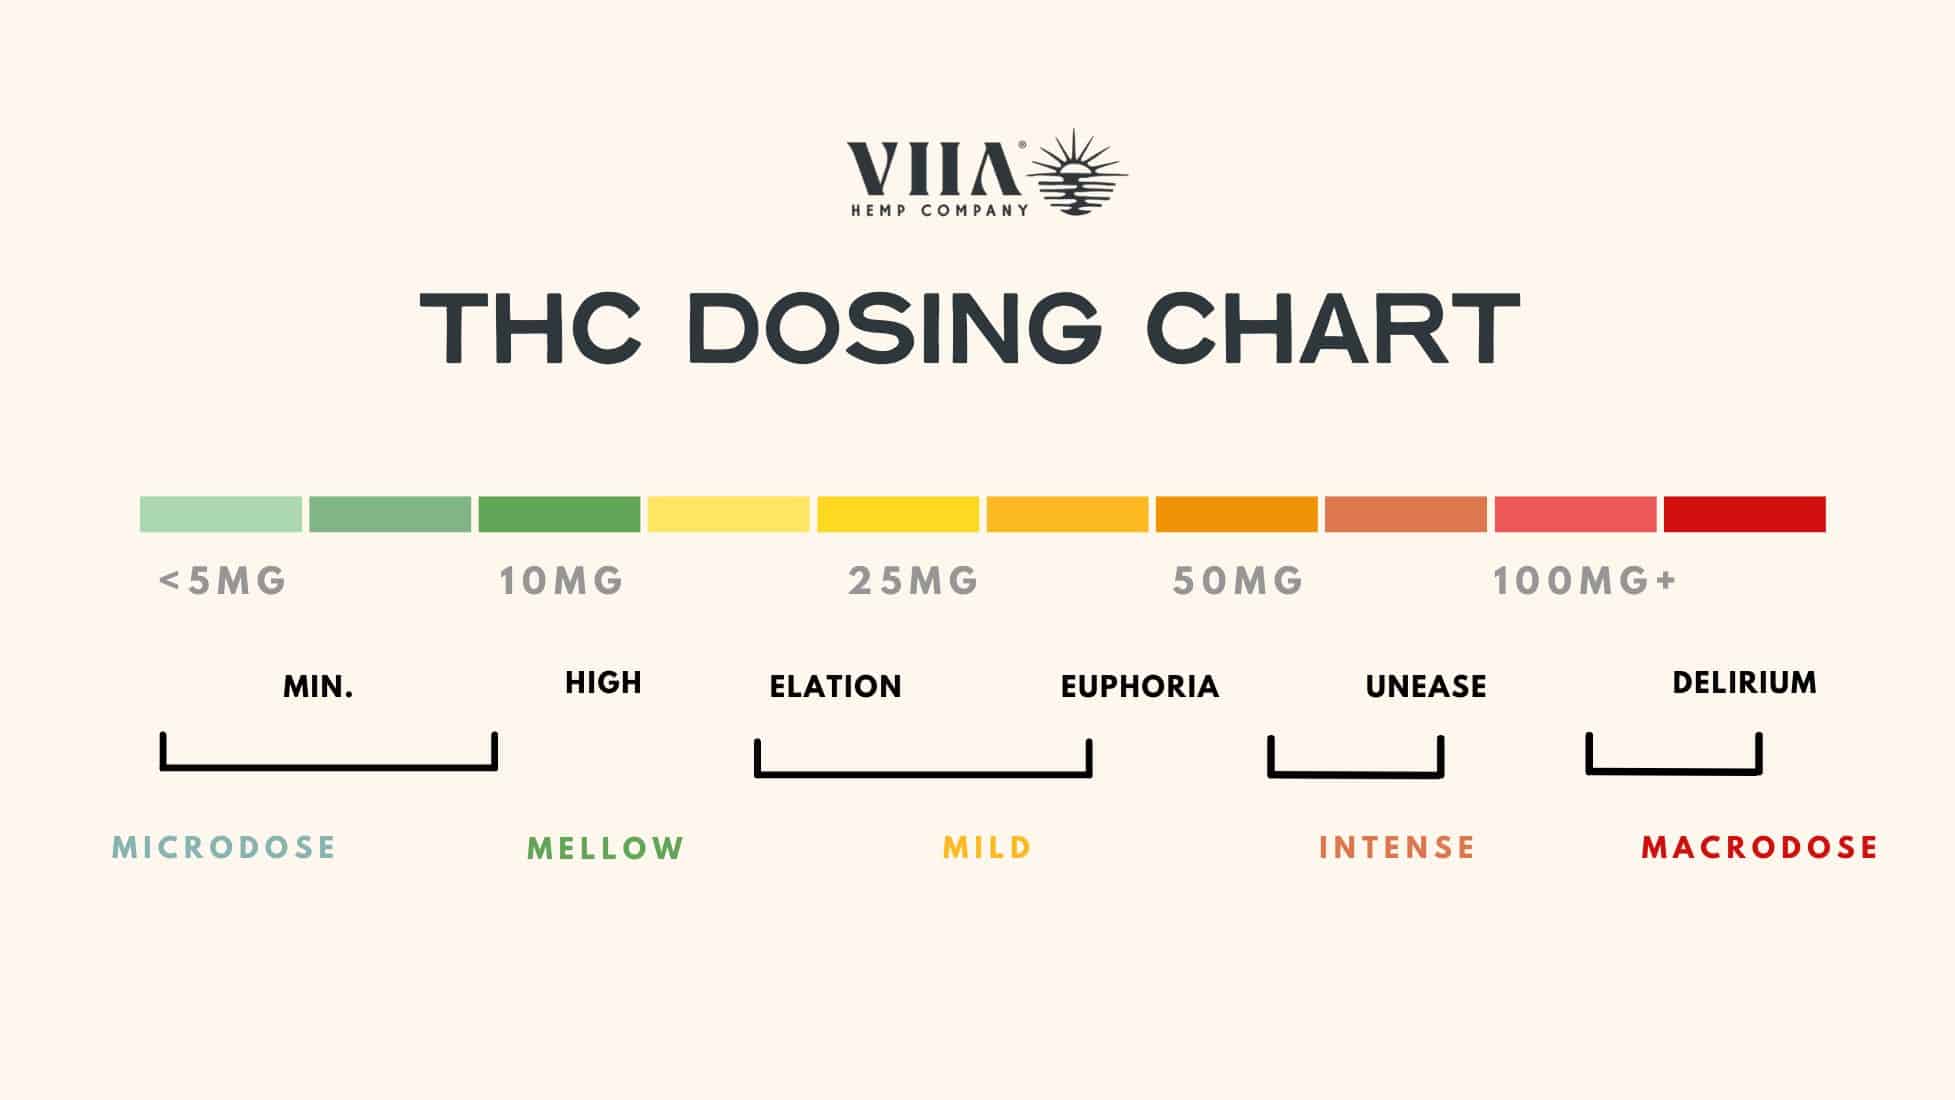 THC Dosing Chart by VIIA Hemp Co